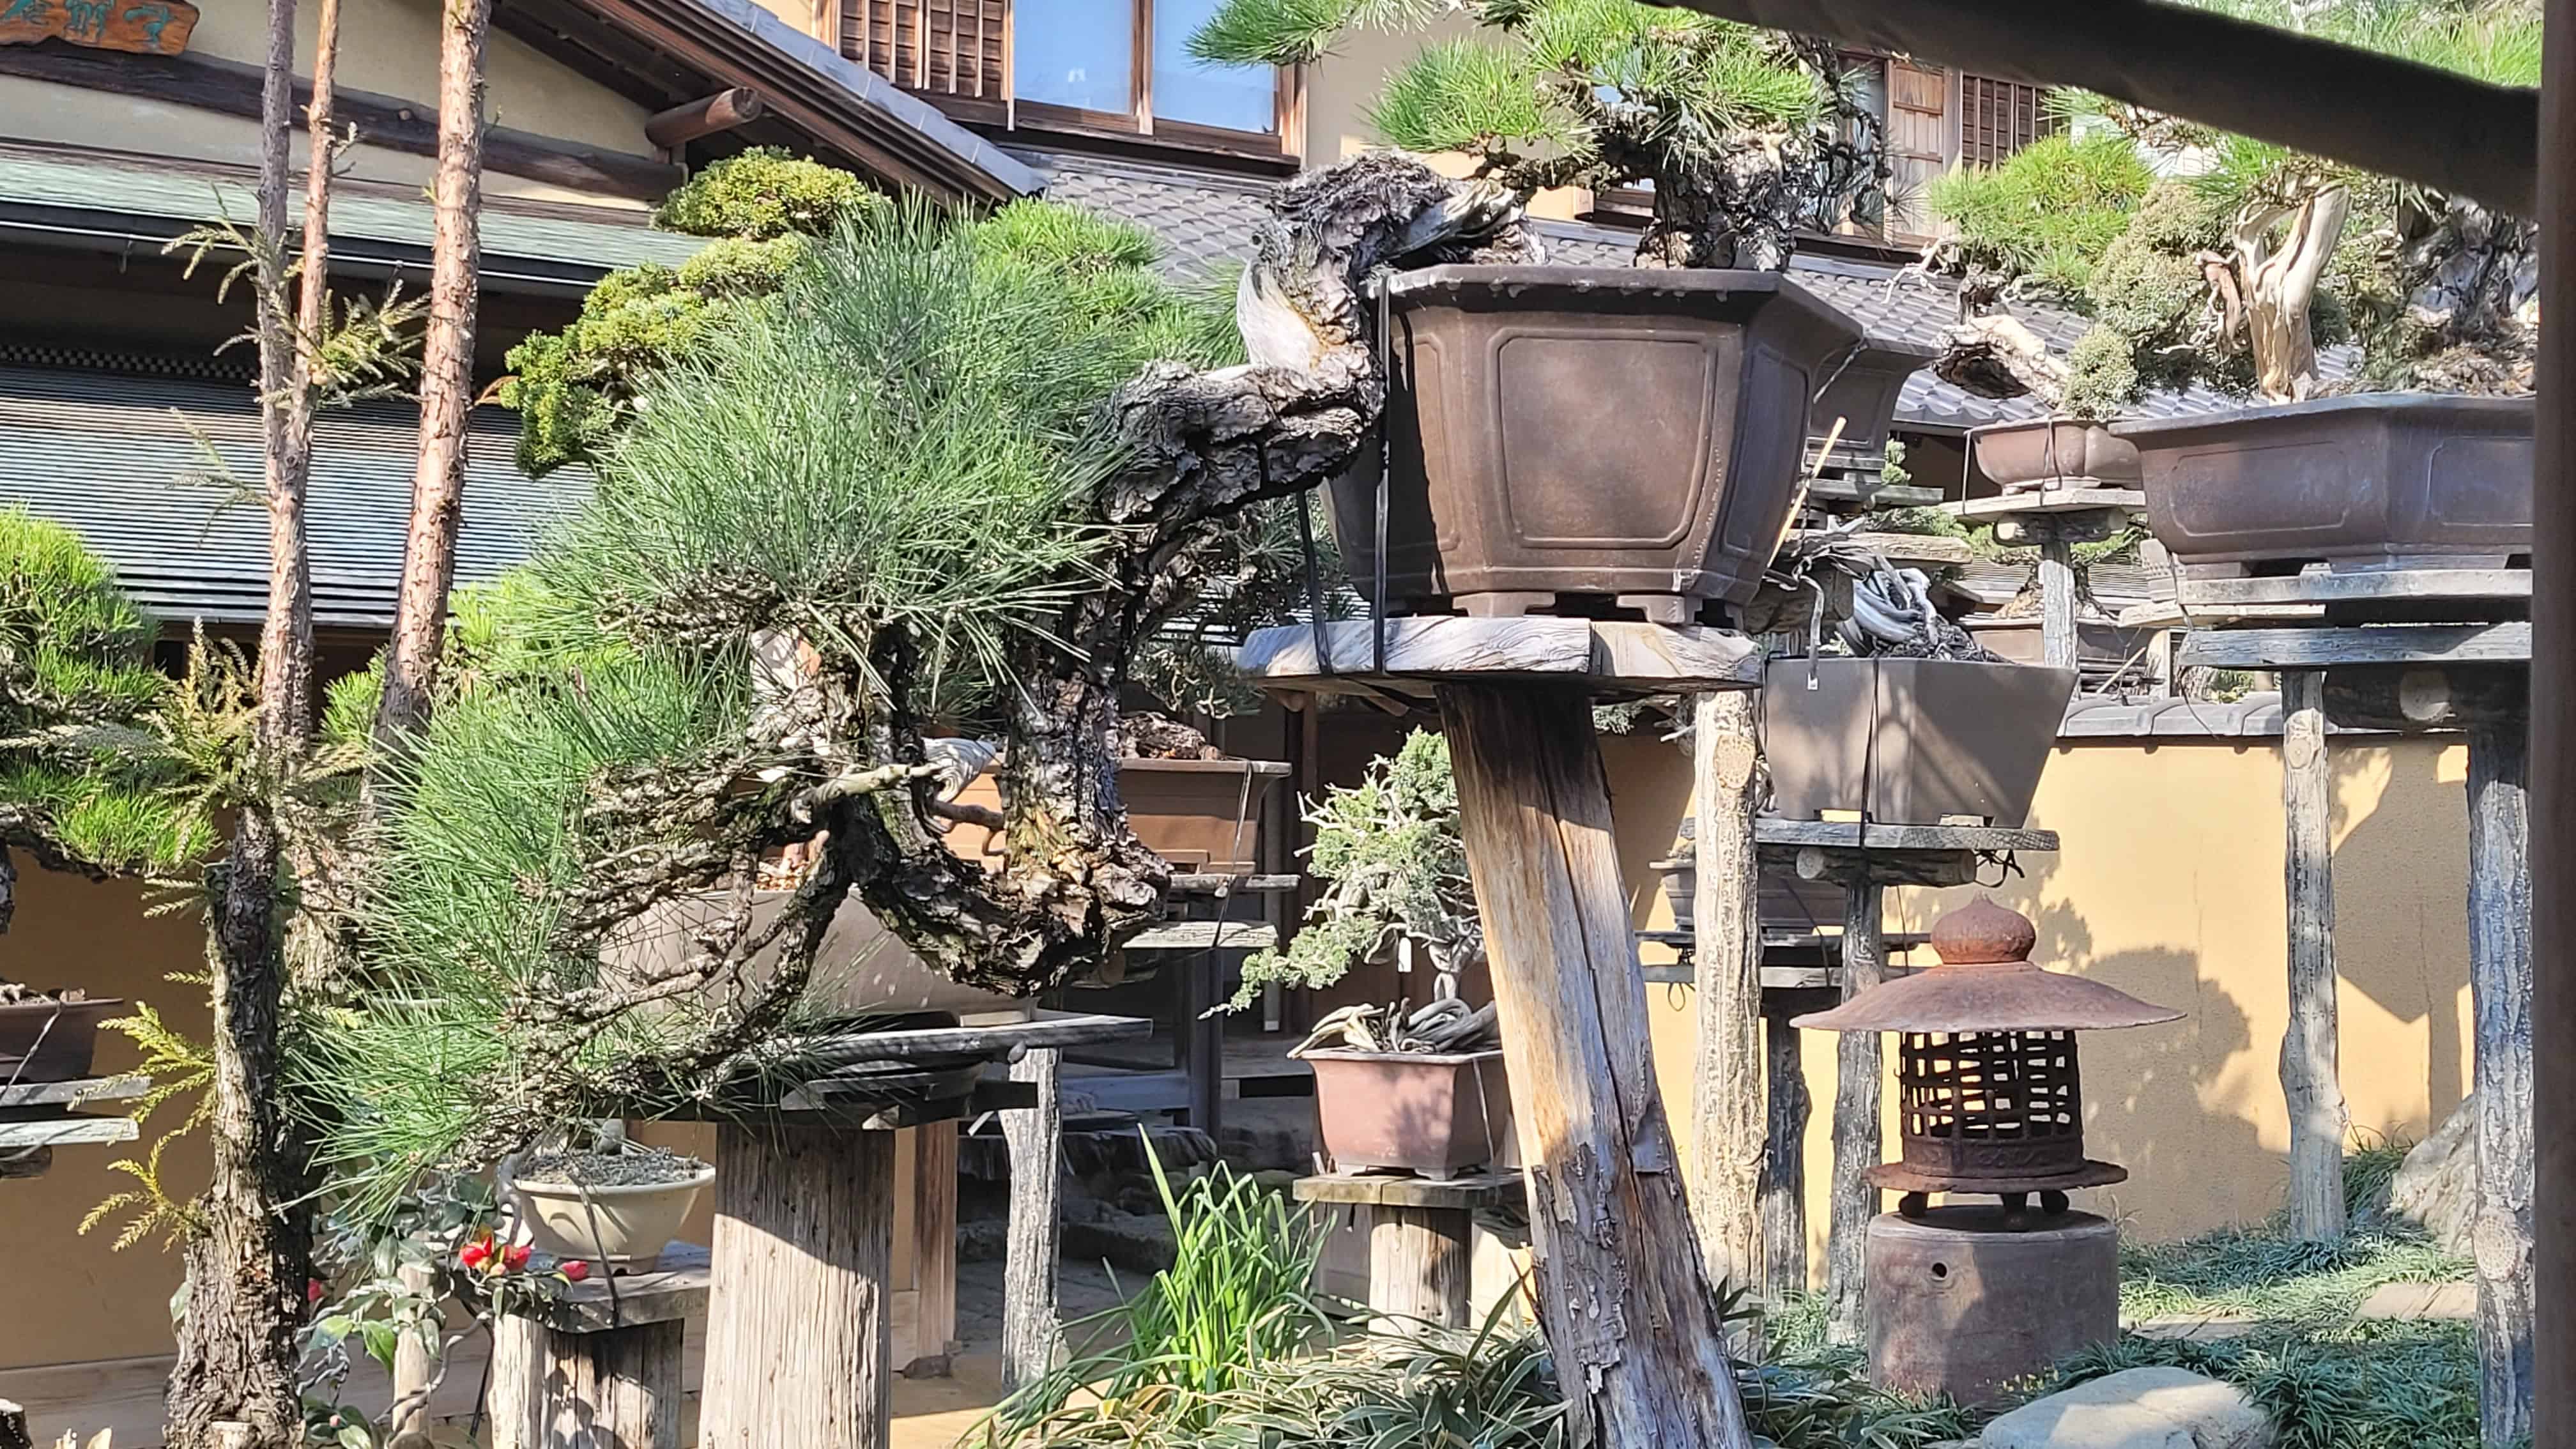 A pine bonsai tree from kobayashi in Japan